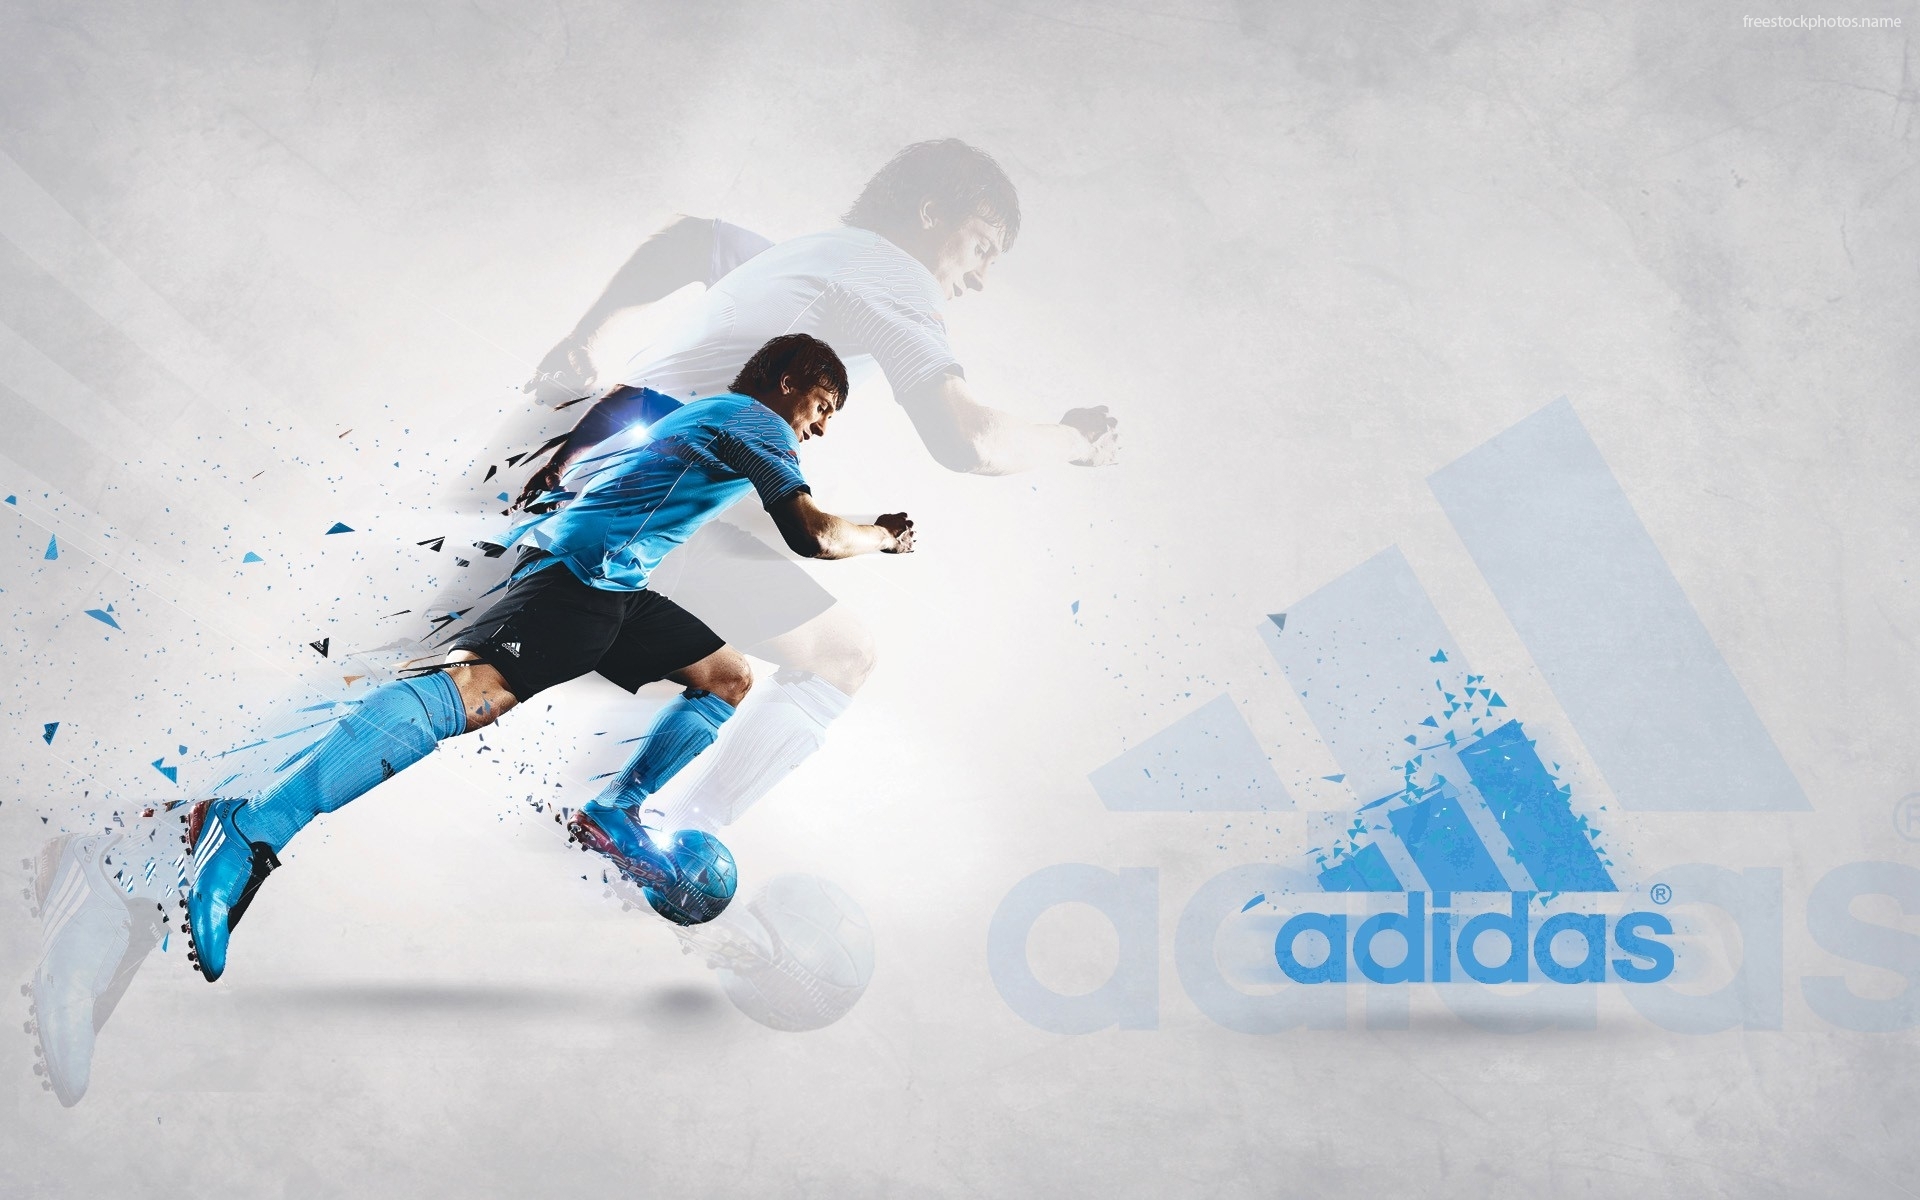 Stock Photos Of Adidas Soccer Player Ball Wallpaper